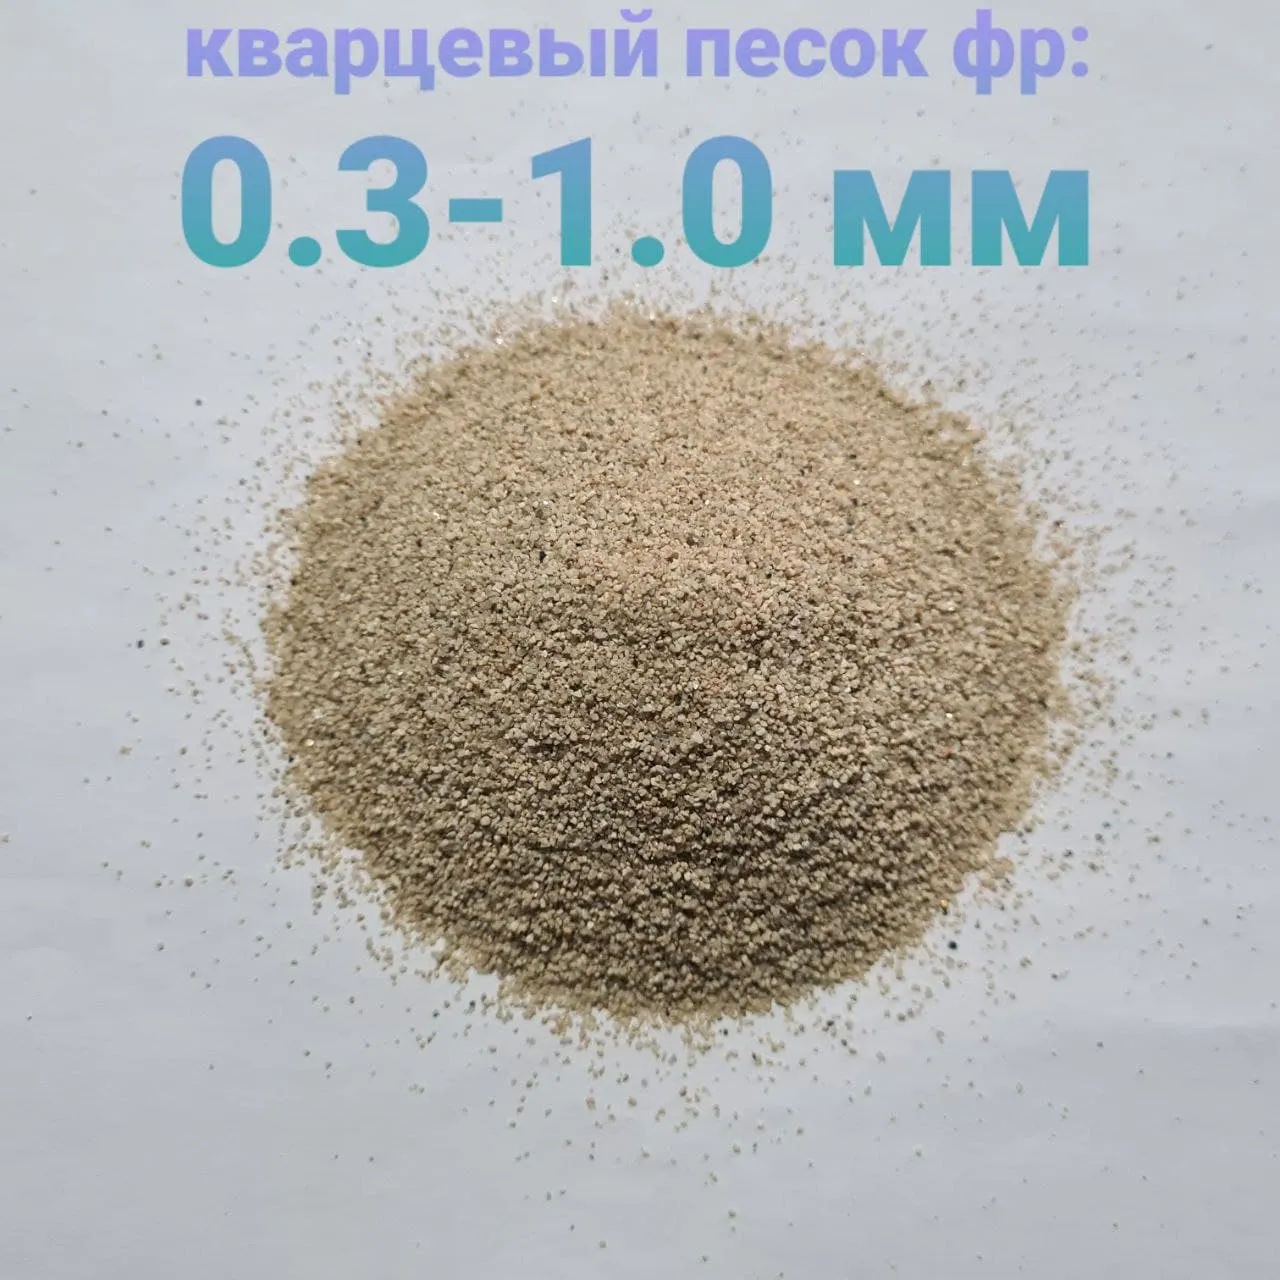 Кварцевый песок фр 0,3-1,0 мм#1